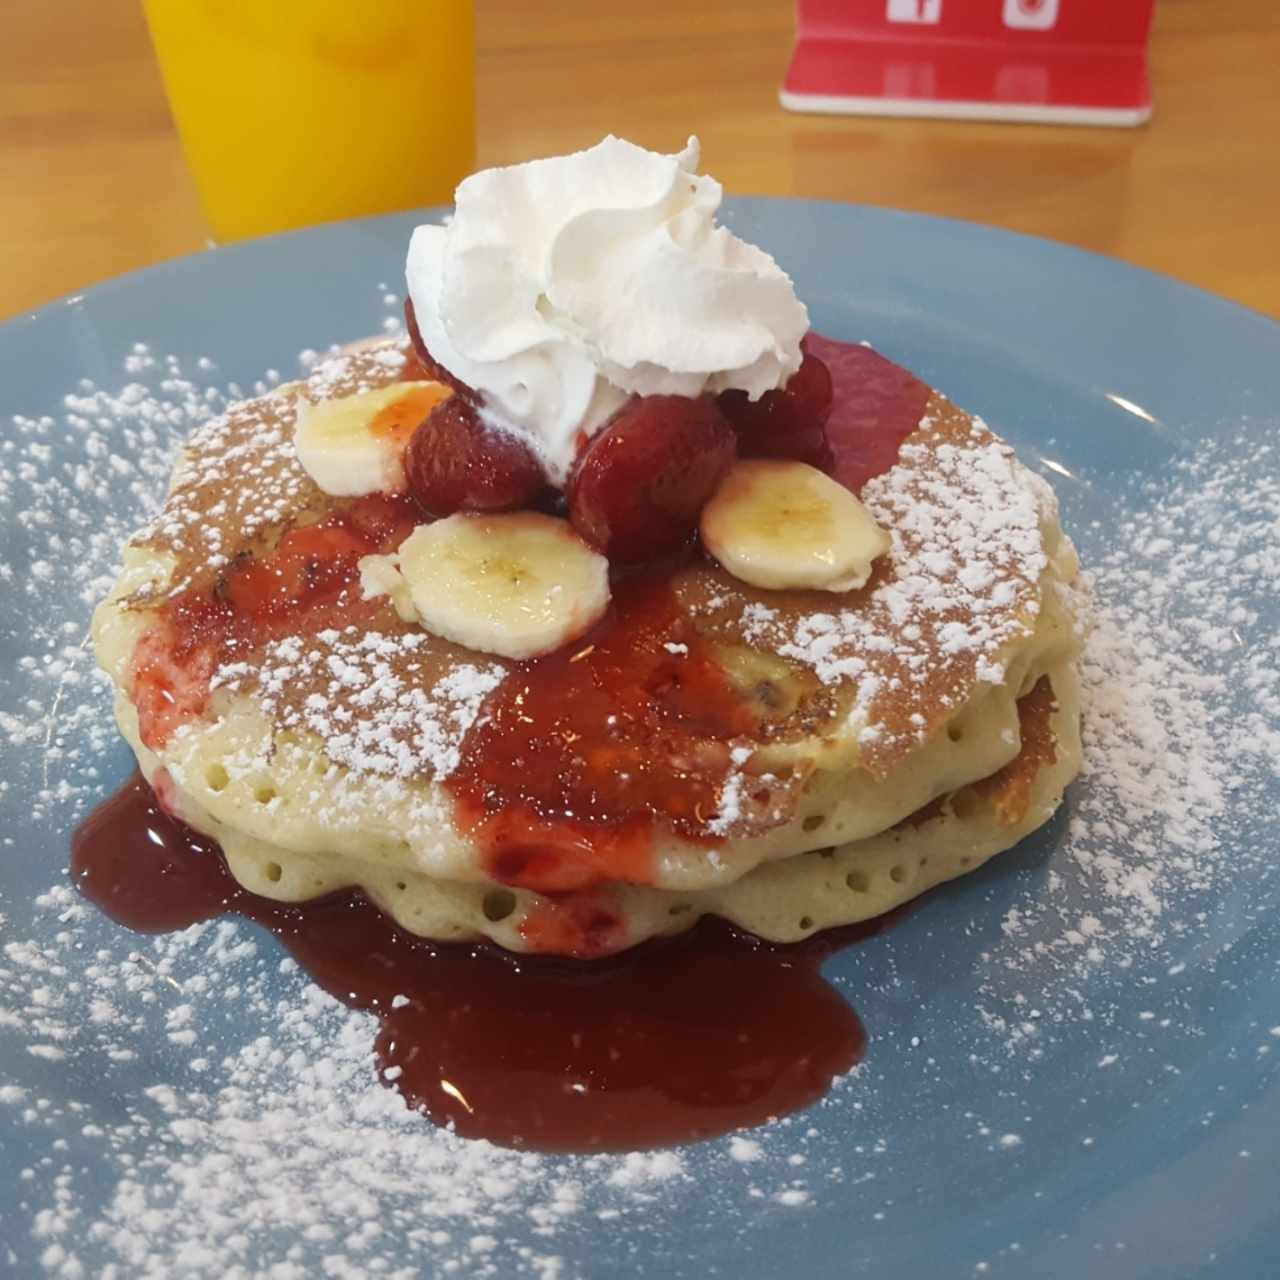 Strawberry banana pancake